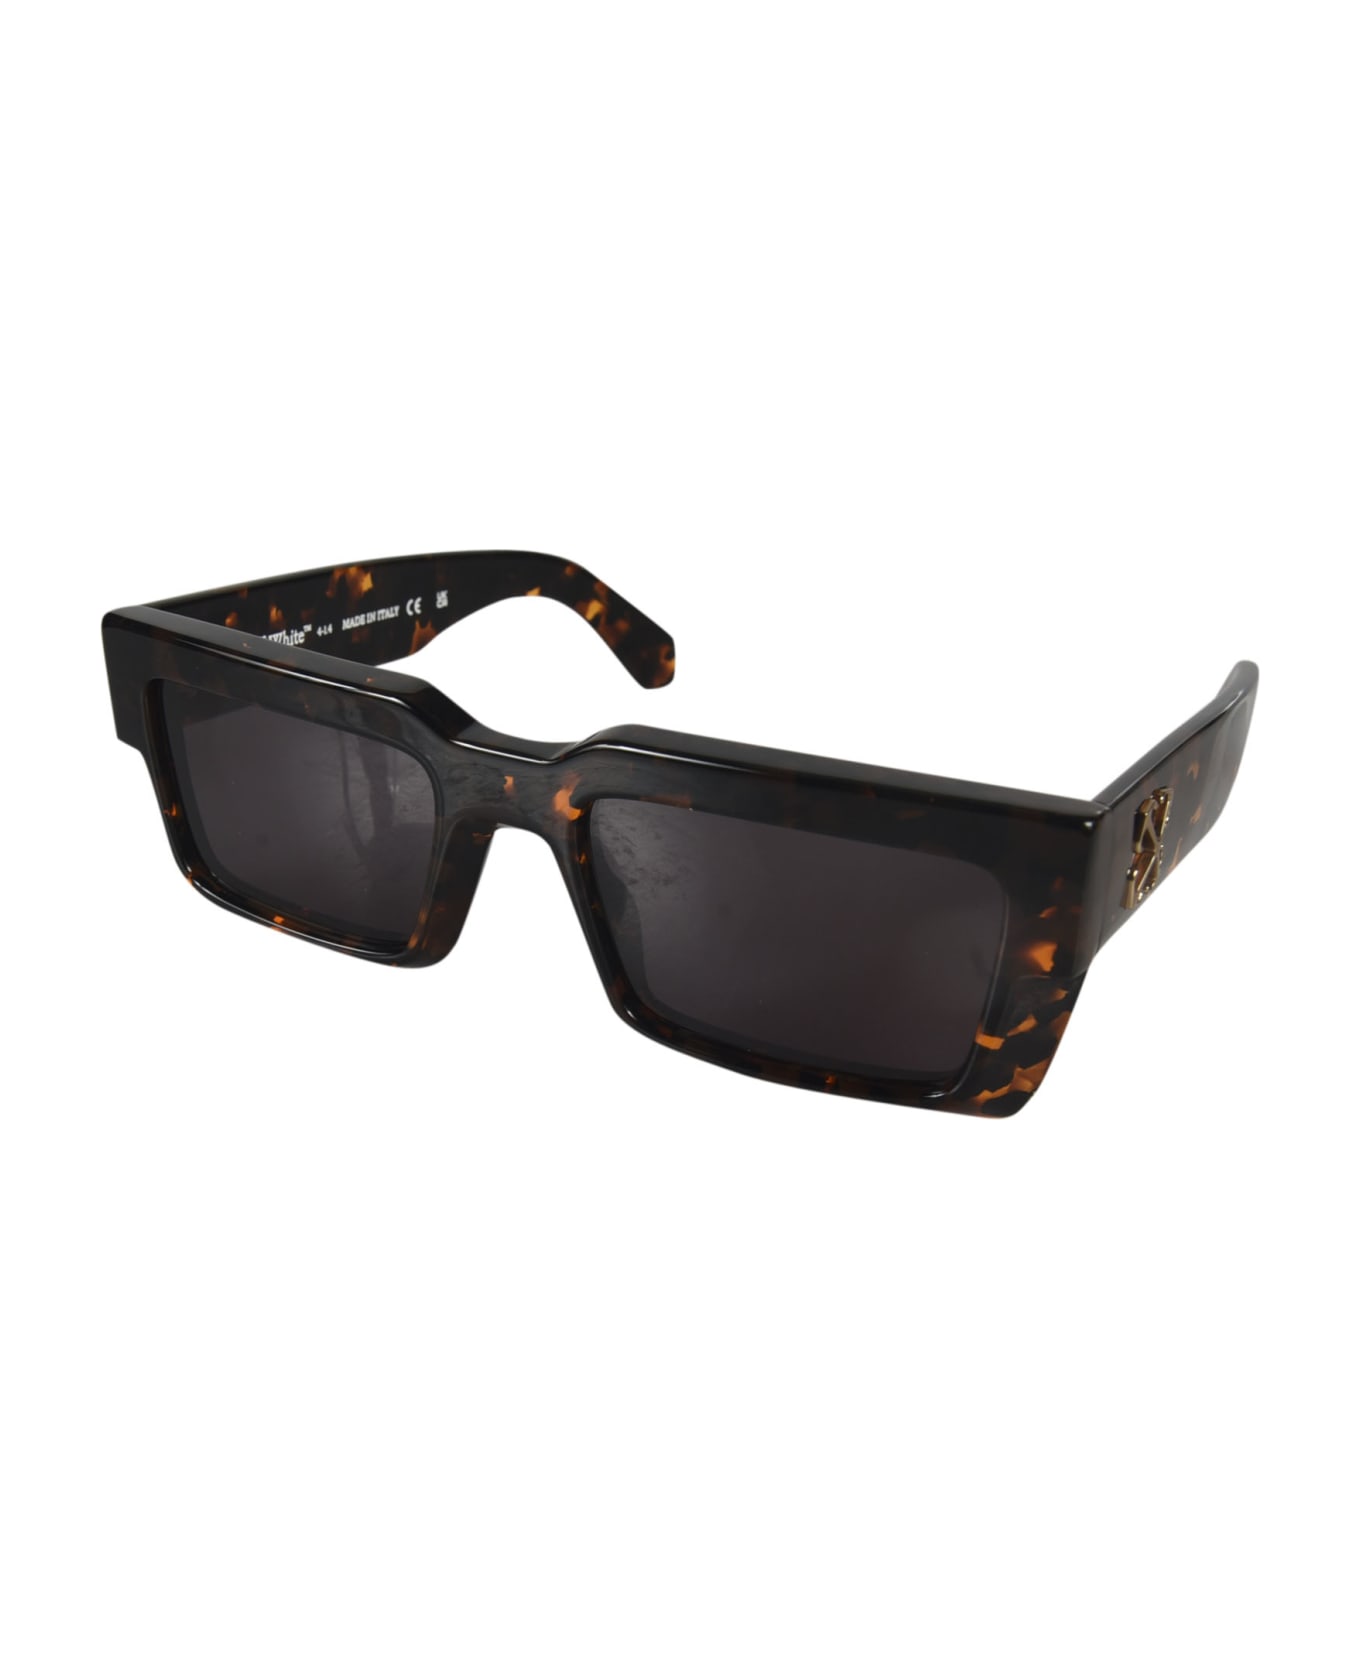 Off-White Moberly Sunglasses - 6007 HAVANA